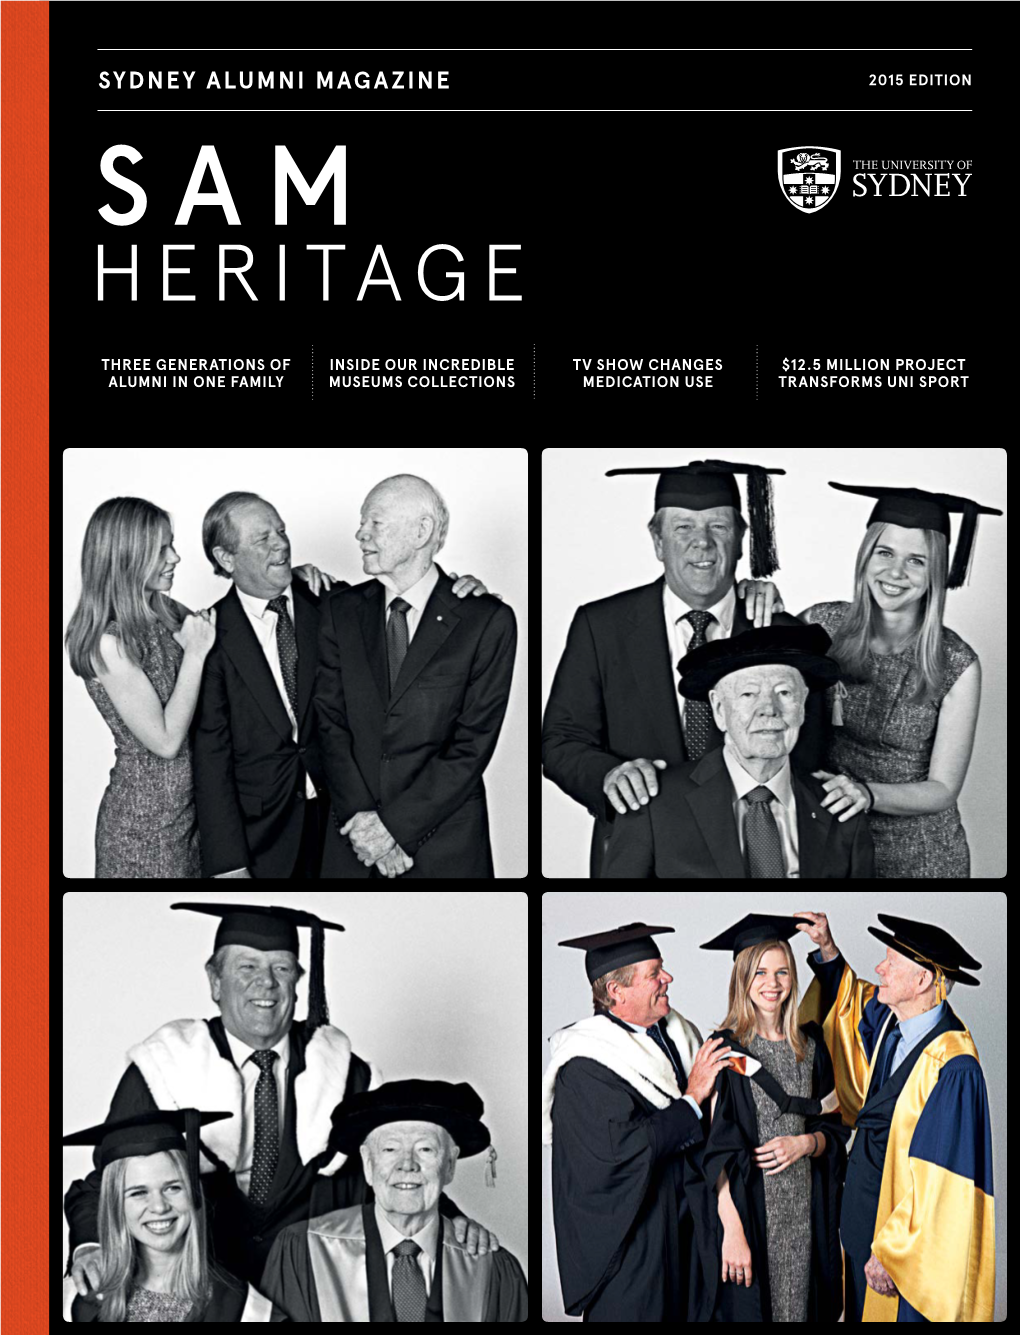 Sydney Alumni Magazine 2015 Edition